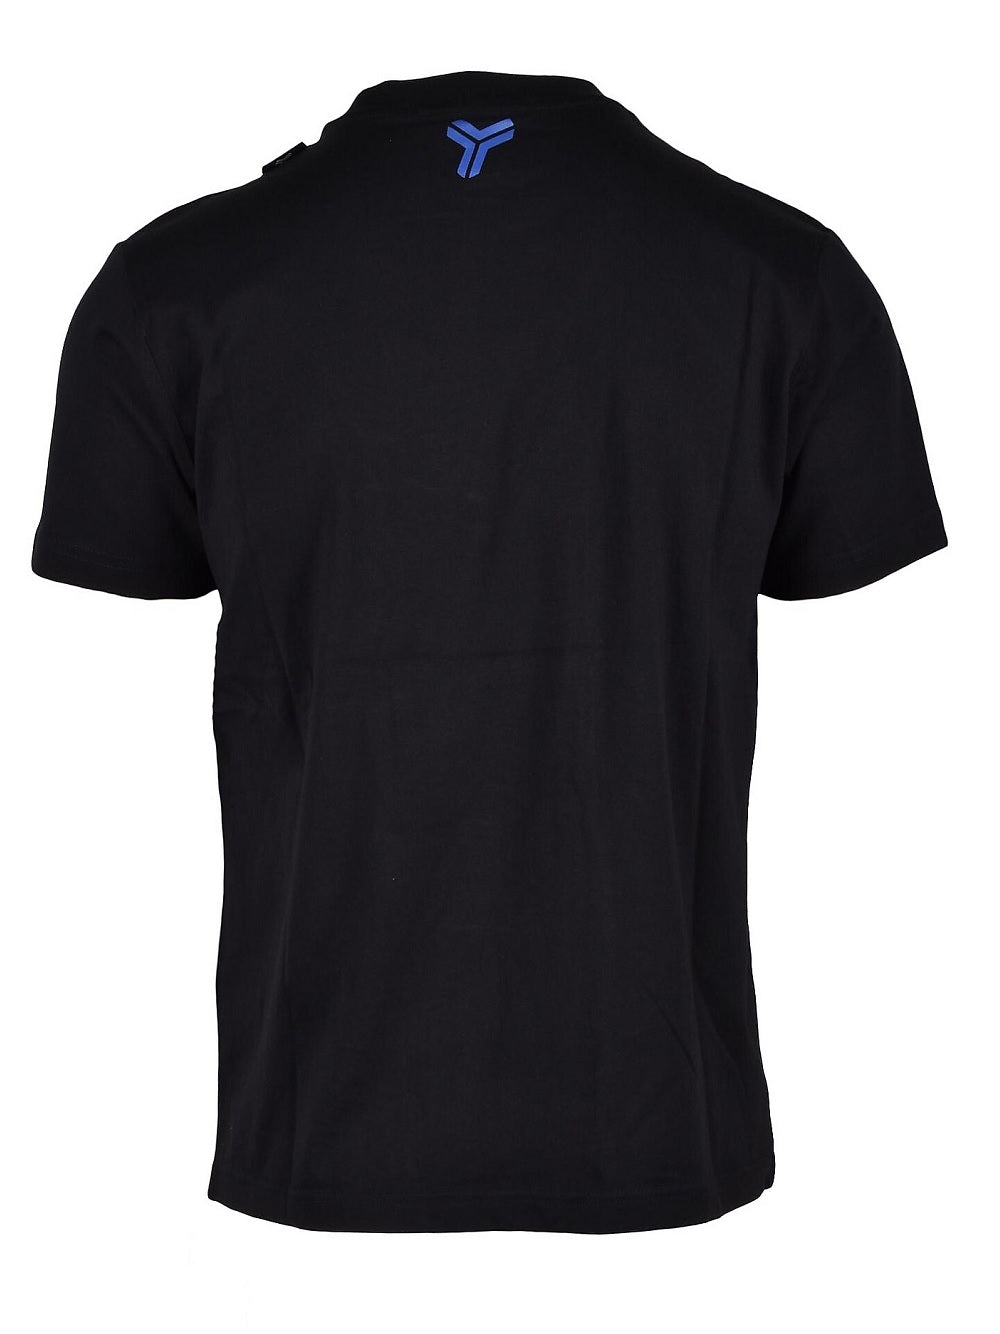 T-shirt John Richmond modello UMP22018TS con stampa frontale e scollo a girocollo.